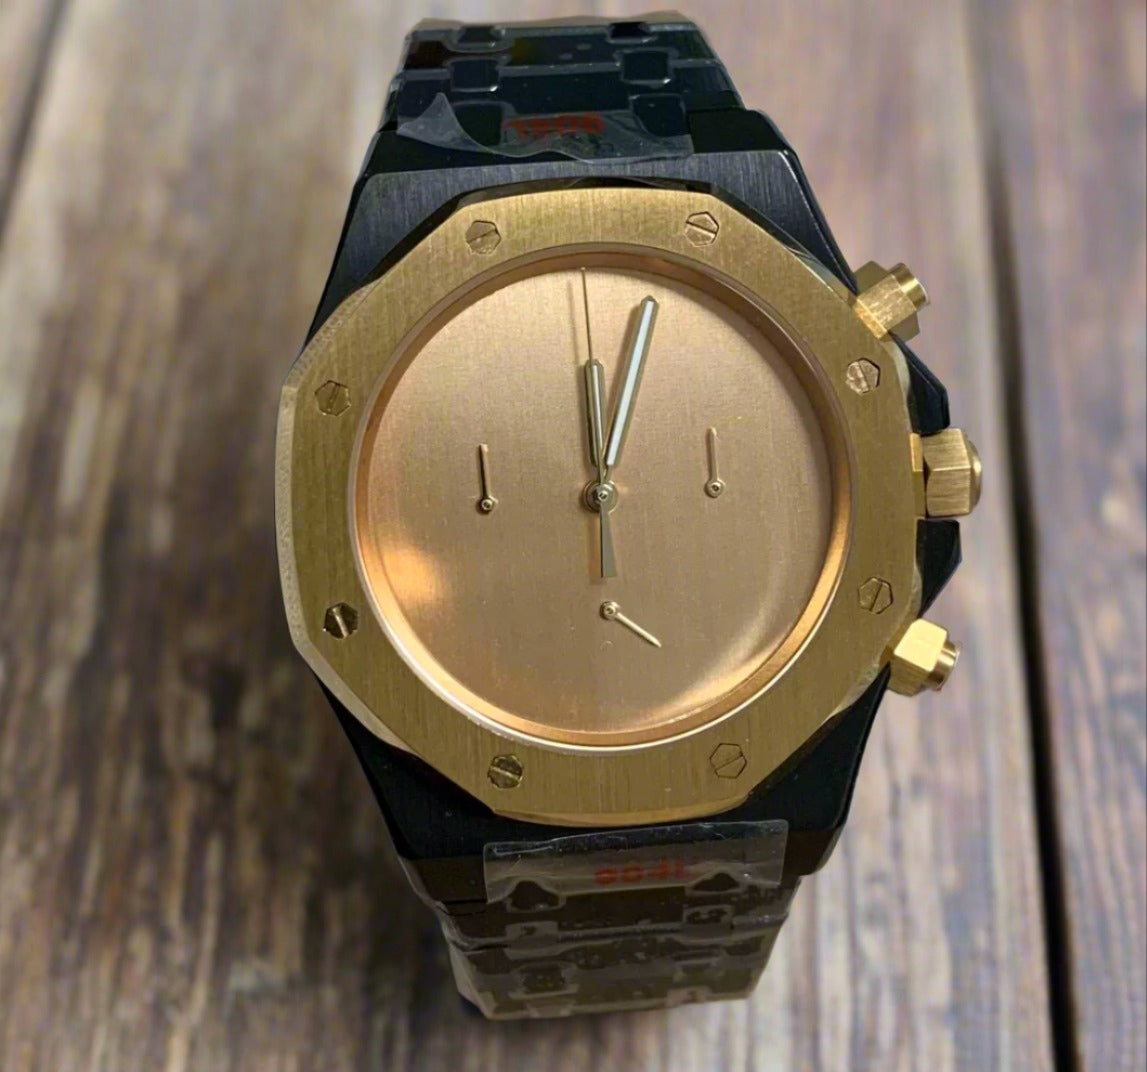 Seiko mod royal oak minimalist chronograph black gold chronograph watch